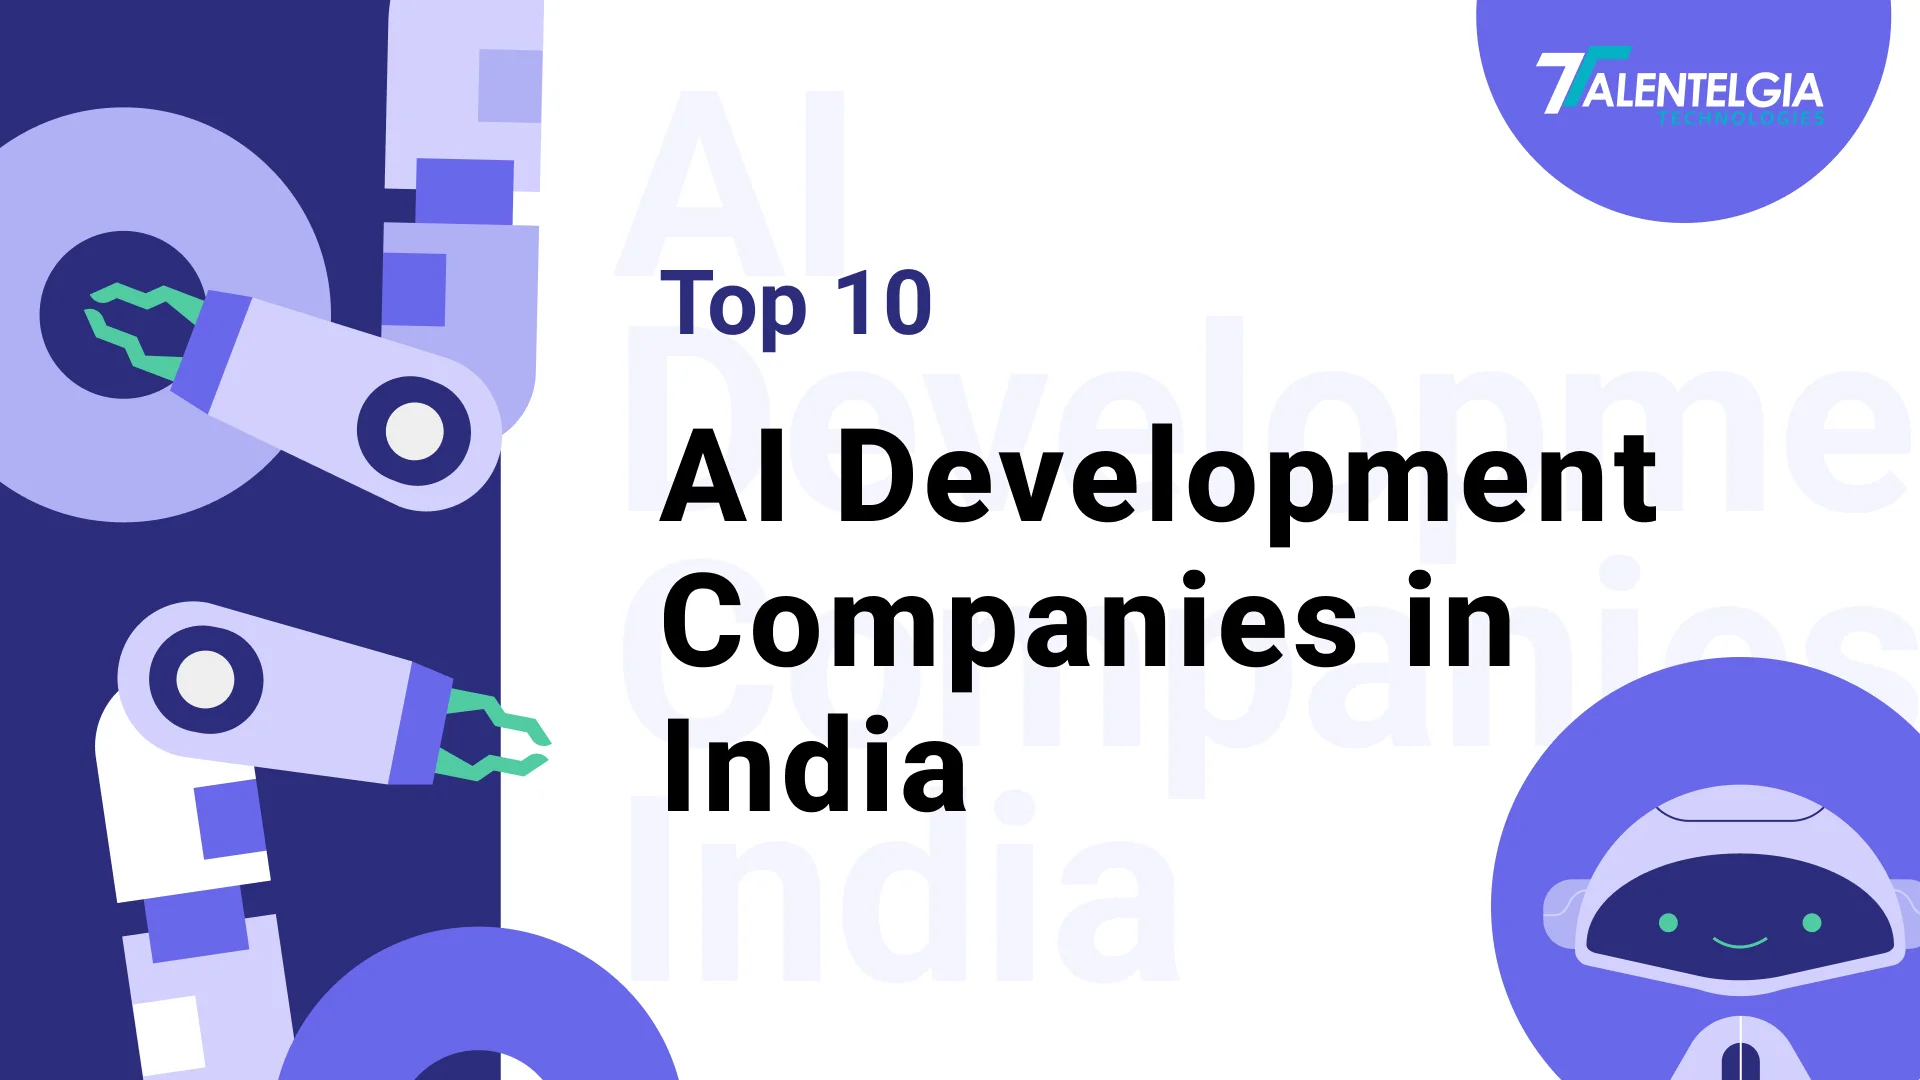 Top 10 AI development companies in India